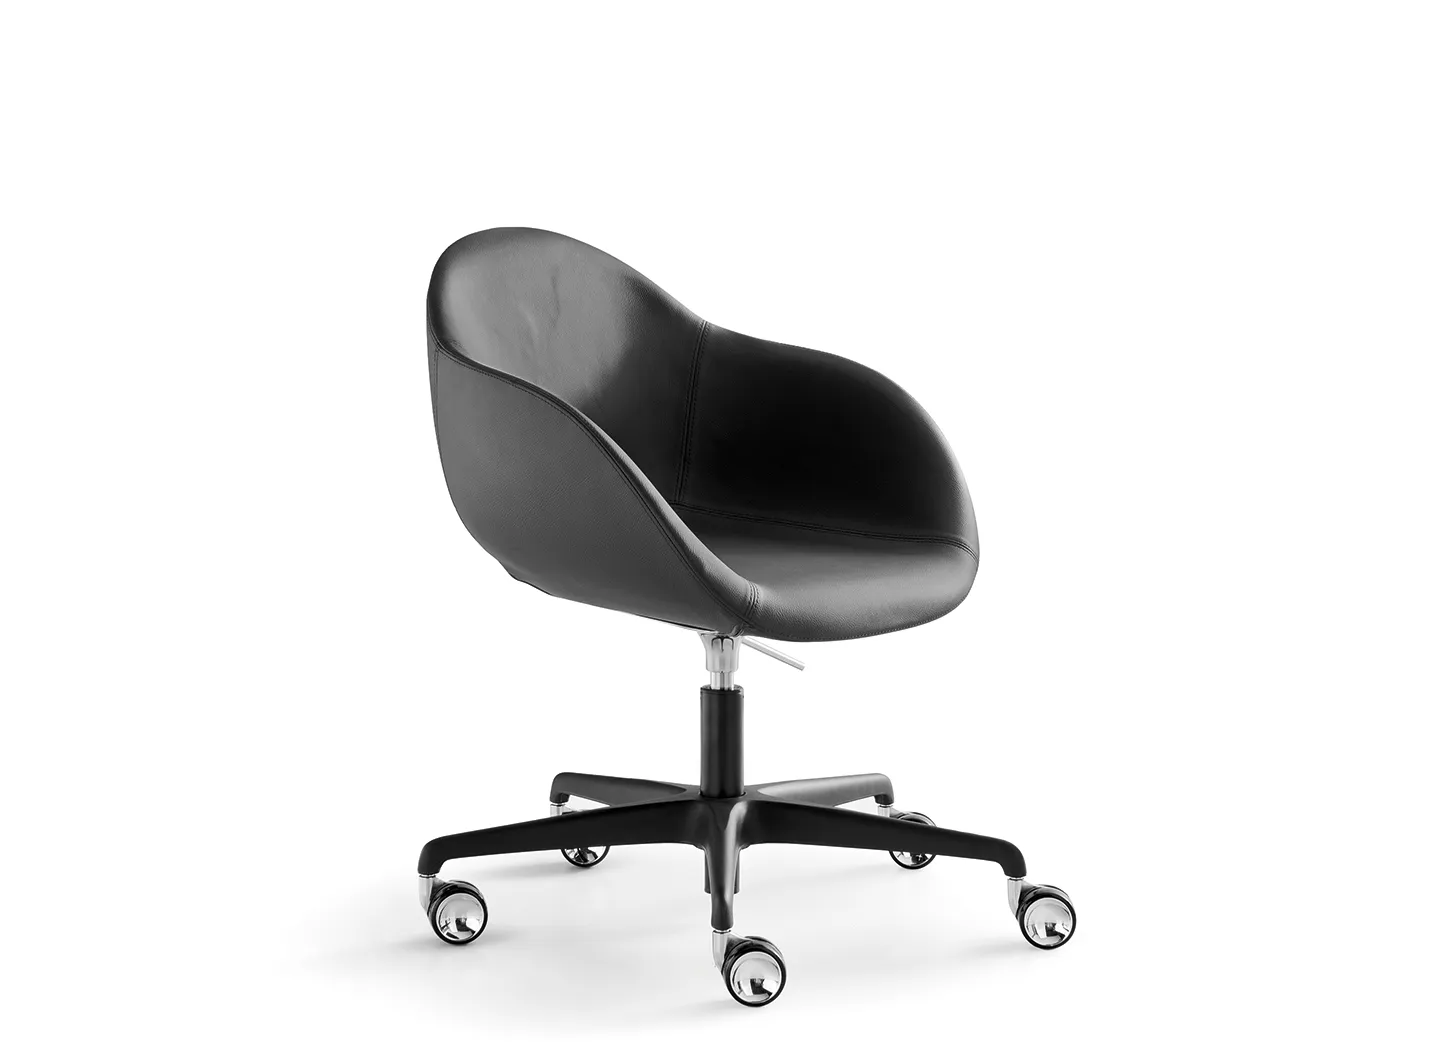 martex-office-taara-chair-seating